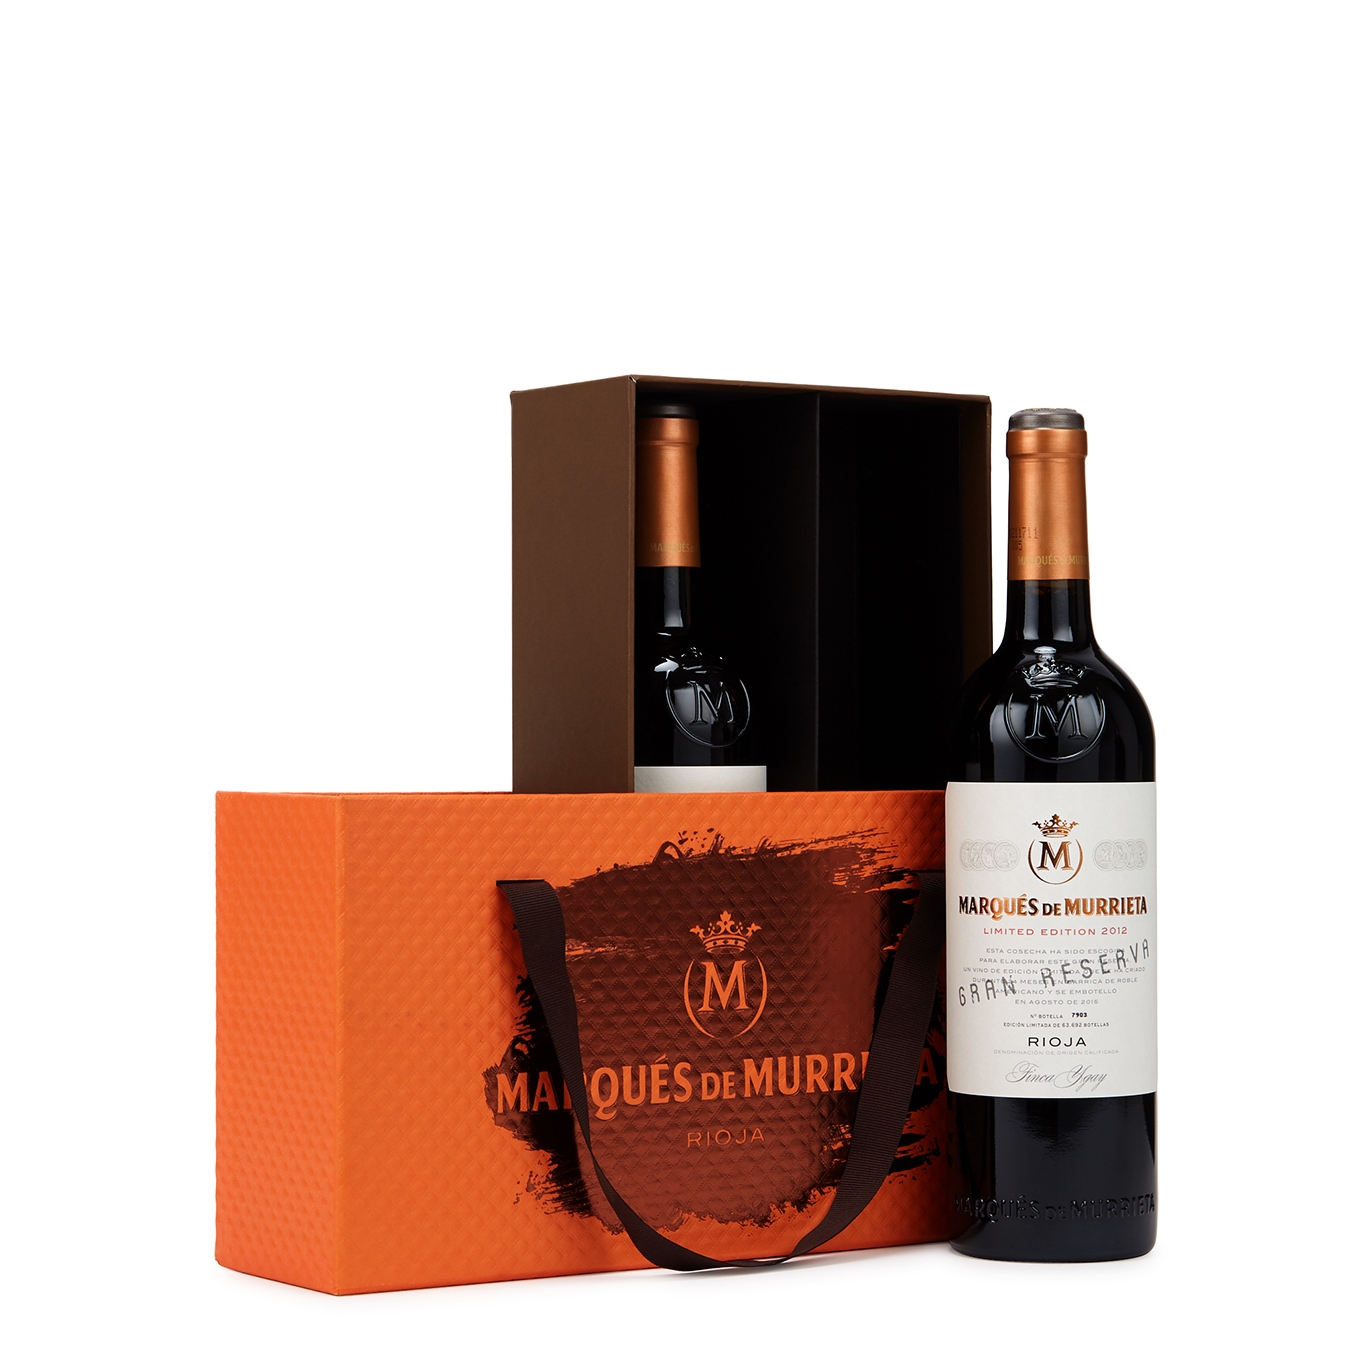 Marques De Murrieta Limited Edition Rioja Gran Reserva 2012 Duo Gift Pack 2 X 750ml Red Wine